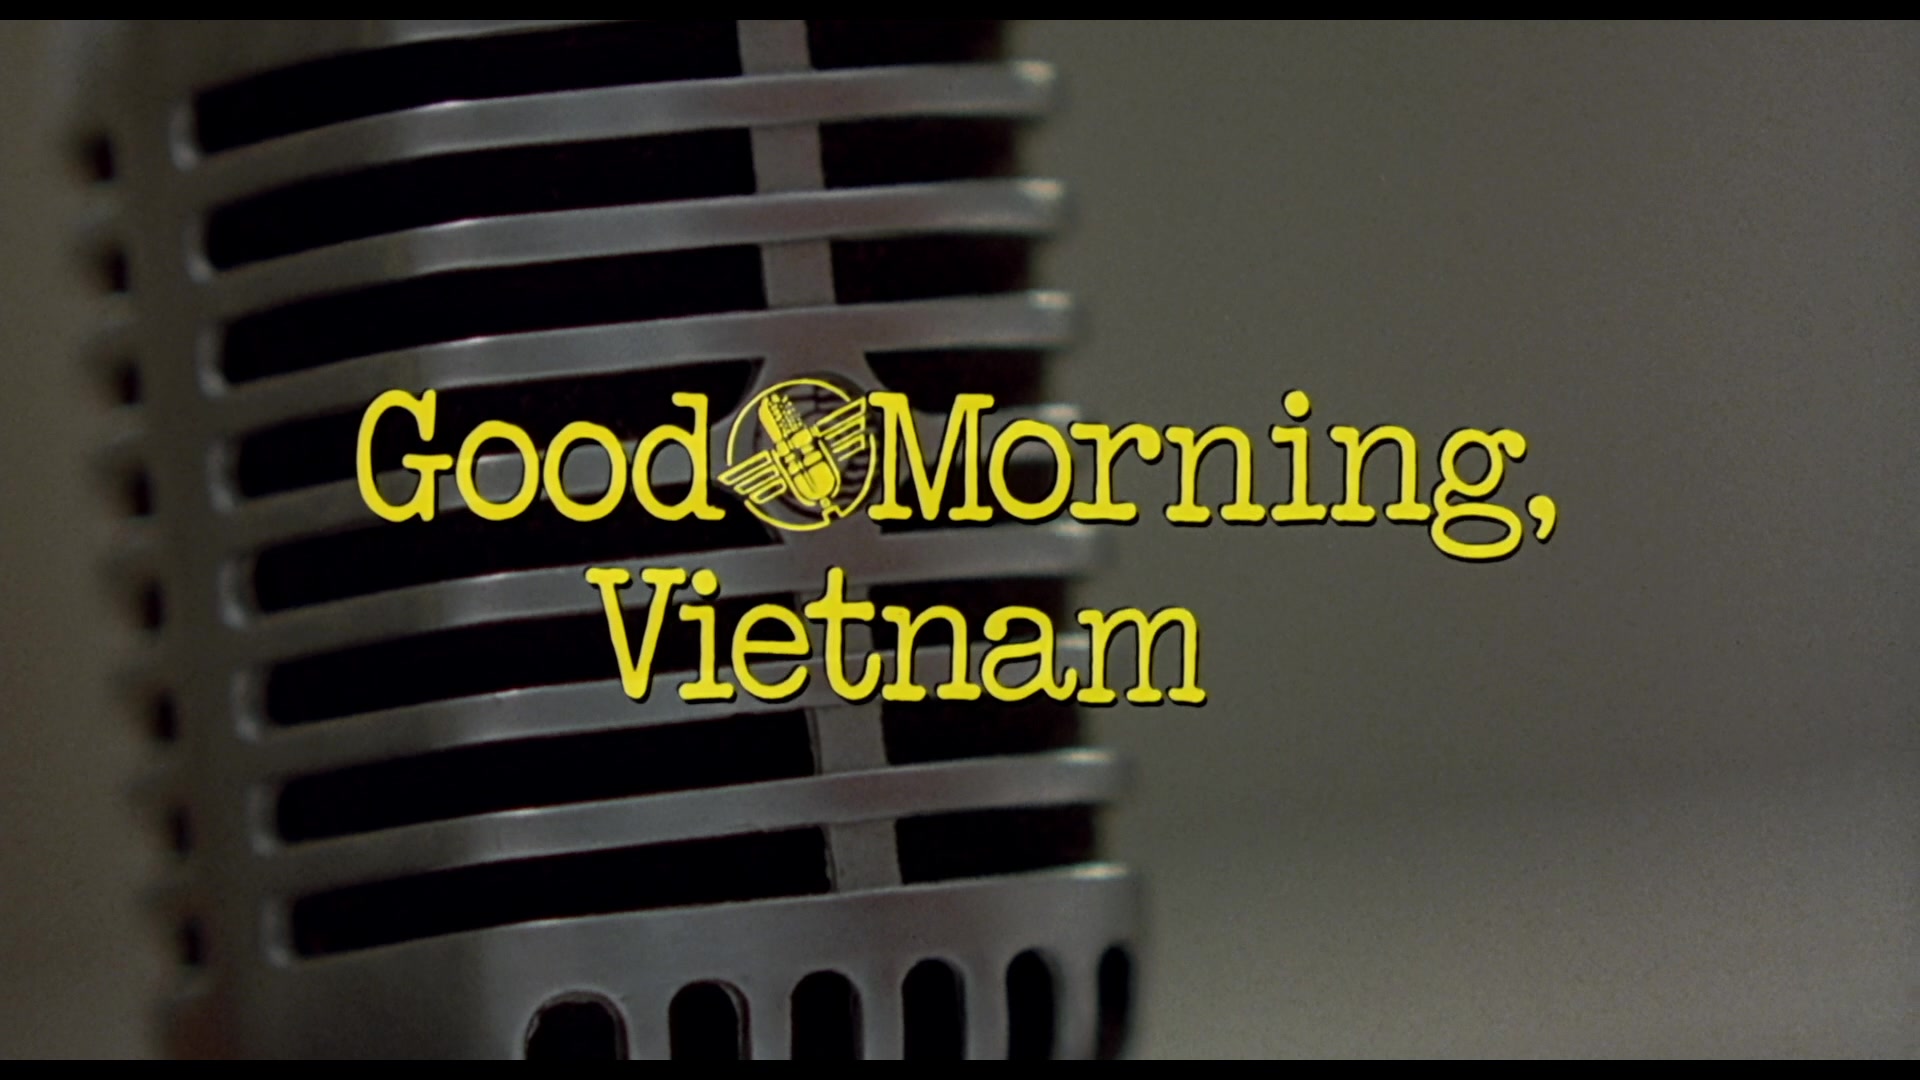 Good morning vietnam sabbath. Гуд Монинг Вьетнам. Гуууууууд морнинг Вьетнам. Гуд морнинг Вьетнам будильник.